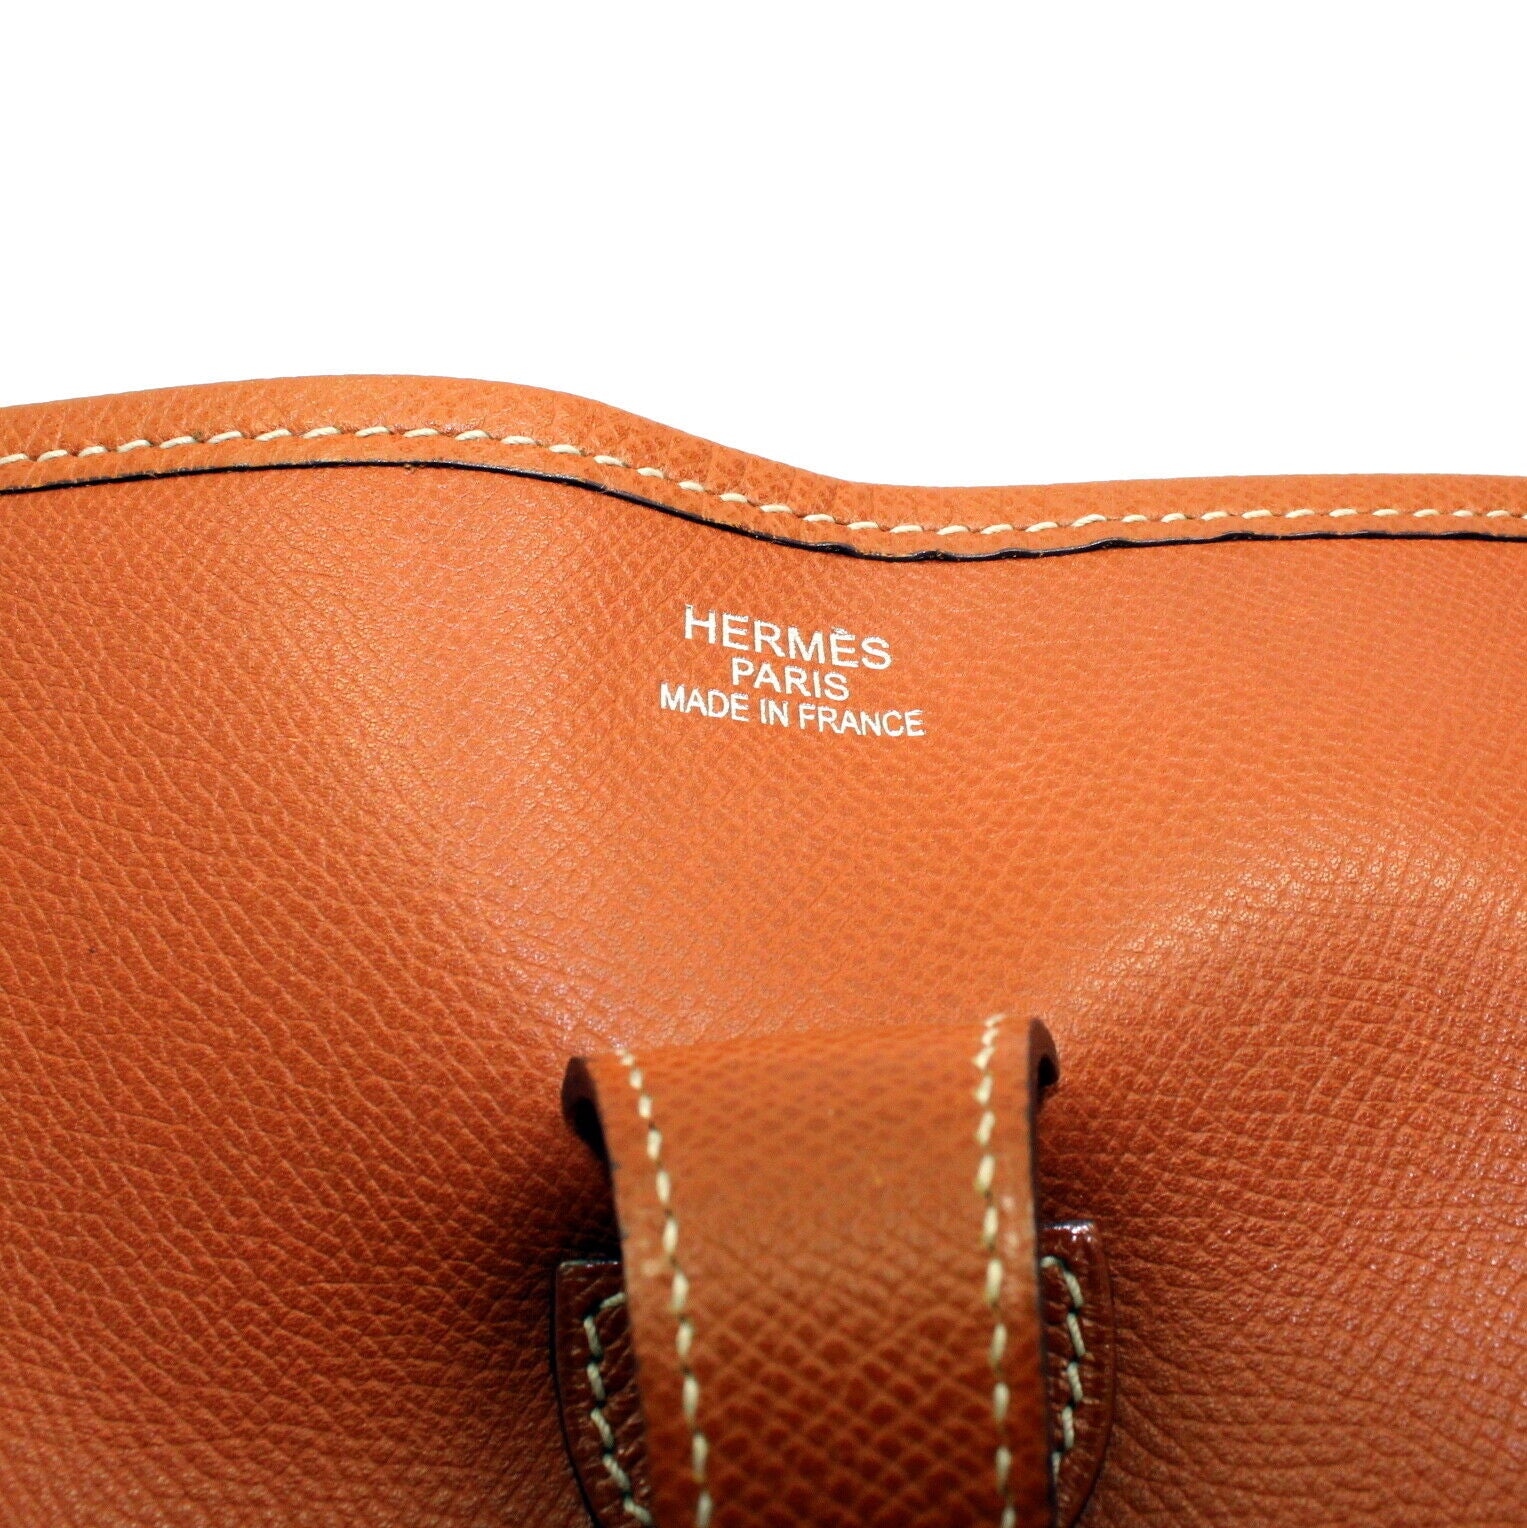 Hard leather designer ladies handbags | Fashion shoulder purse